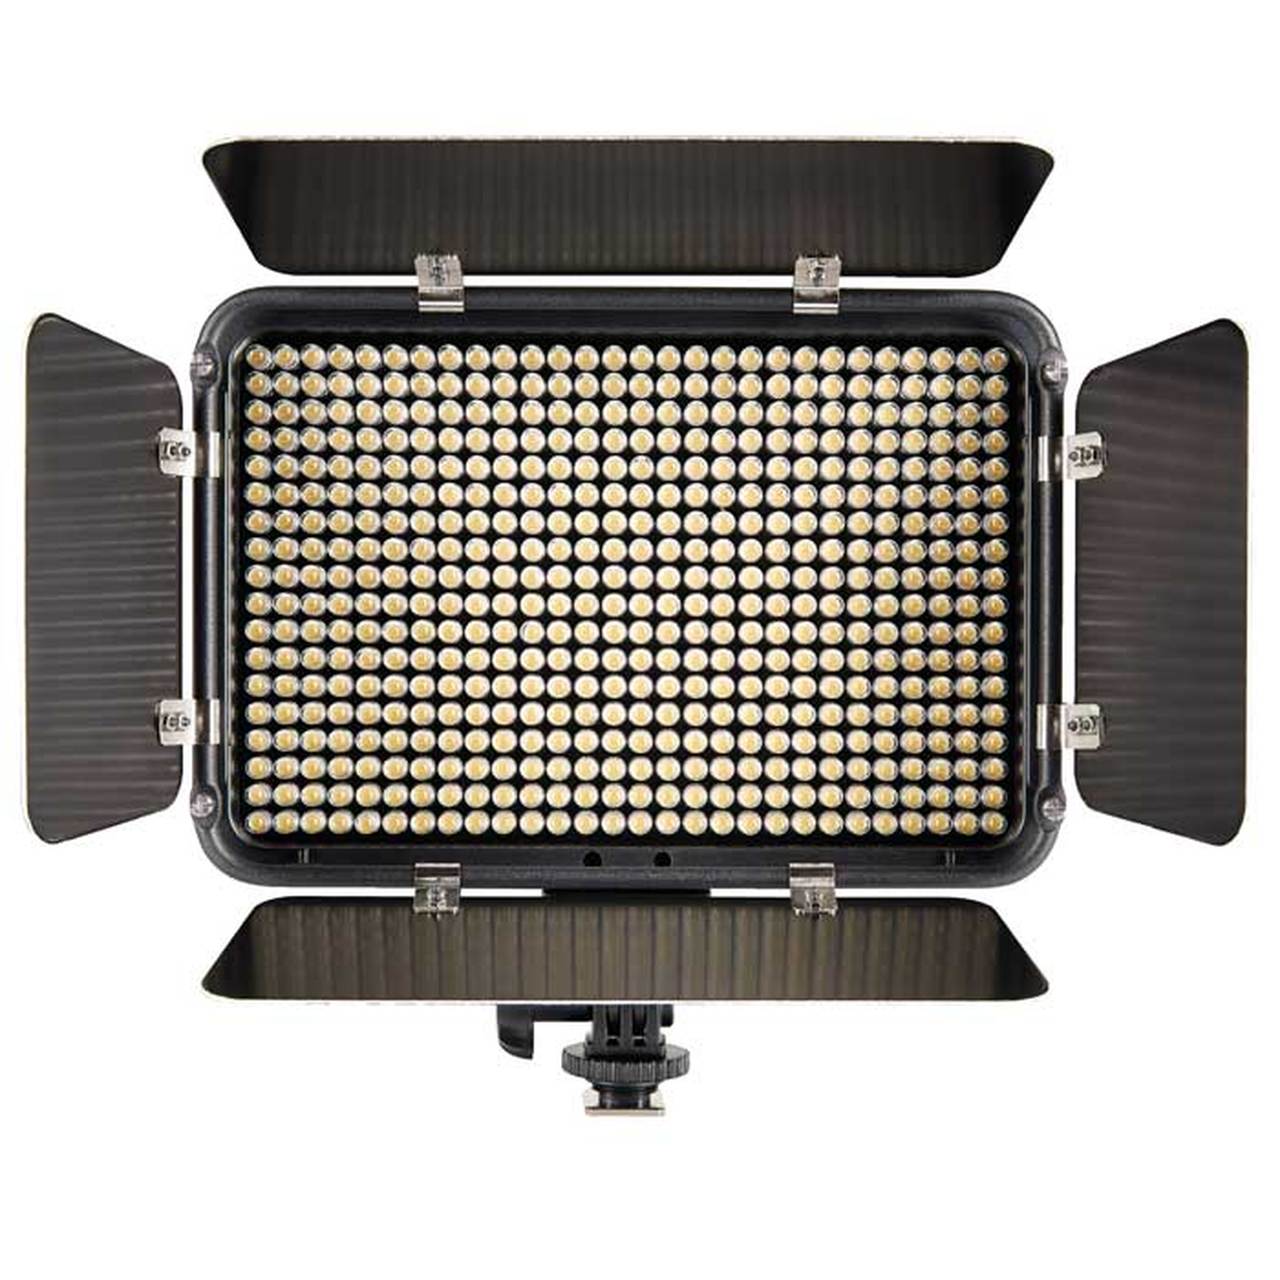 Promaster 7509 LED 504 D Specialist  Camera /Video Light - Daylight